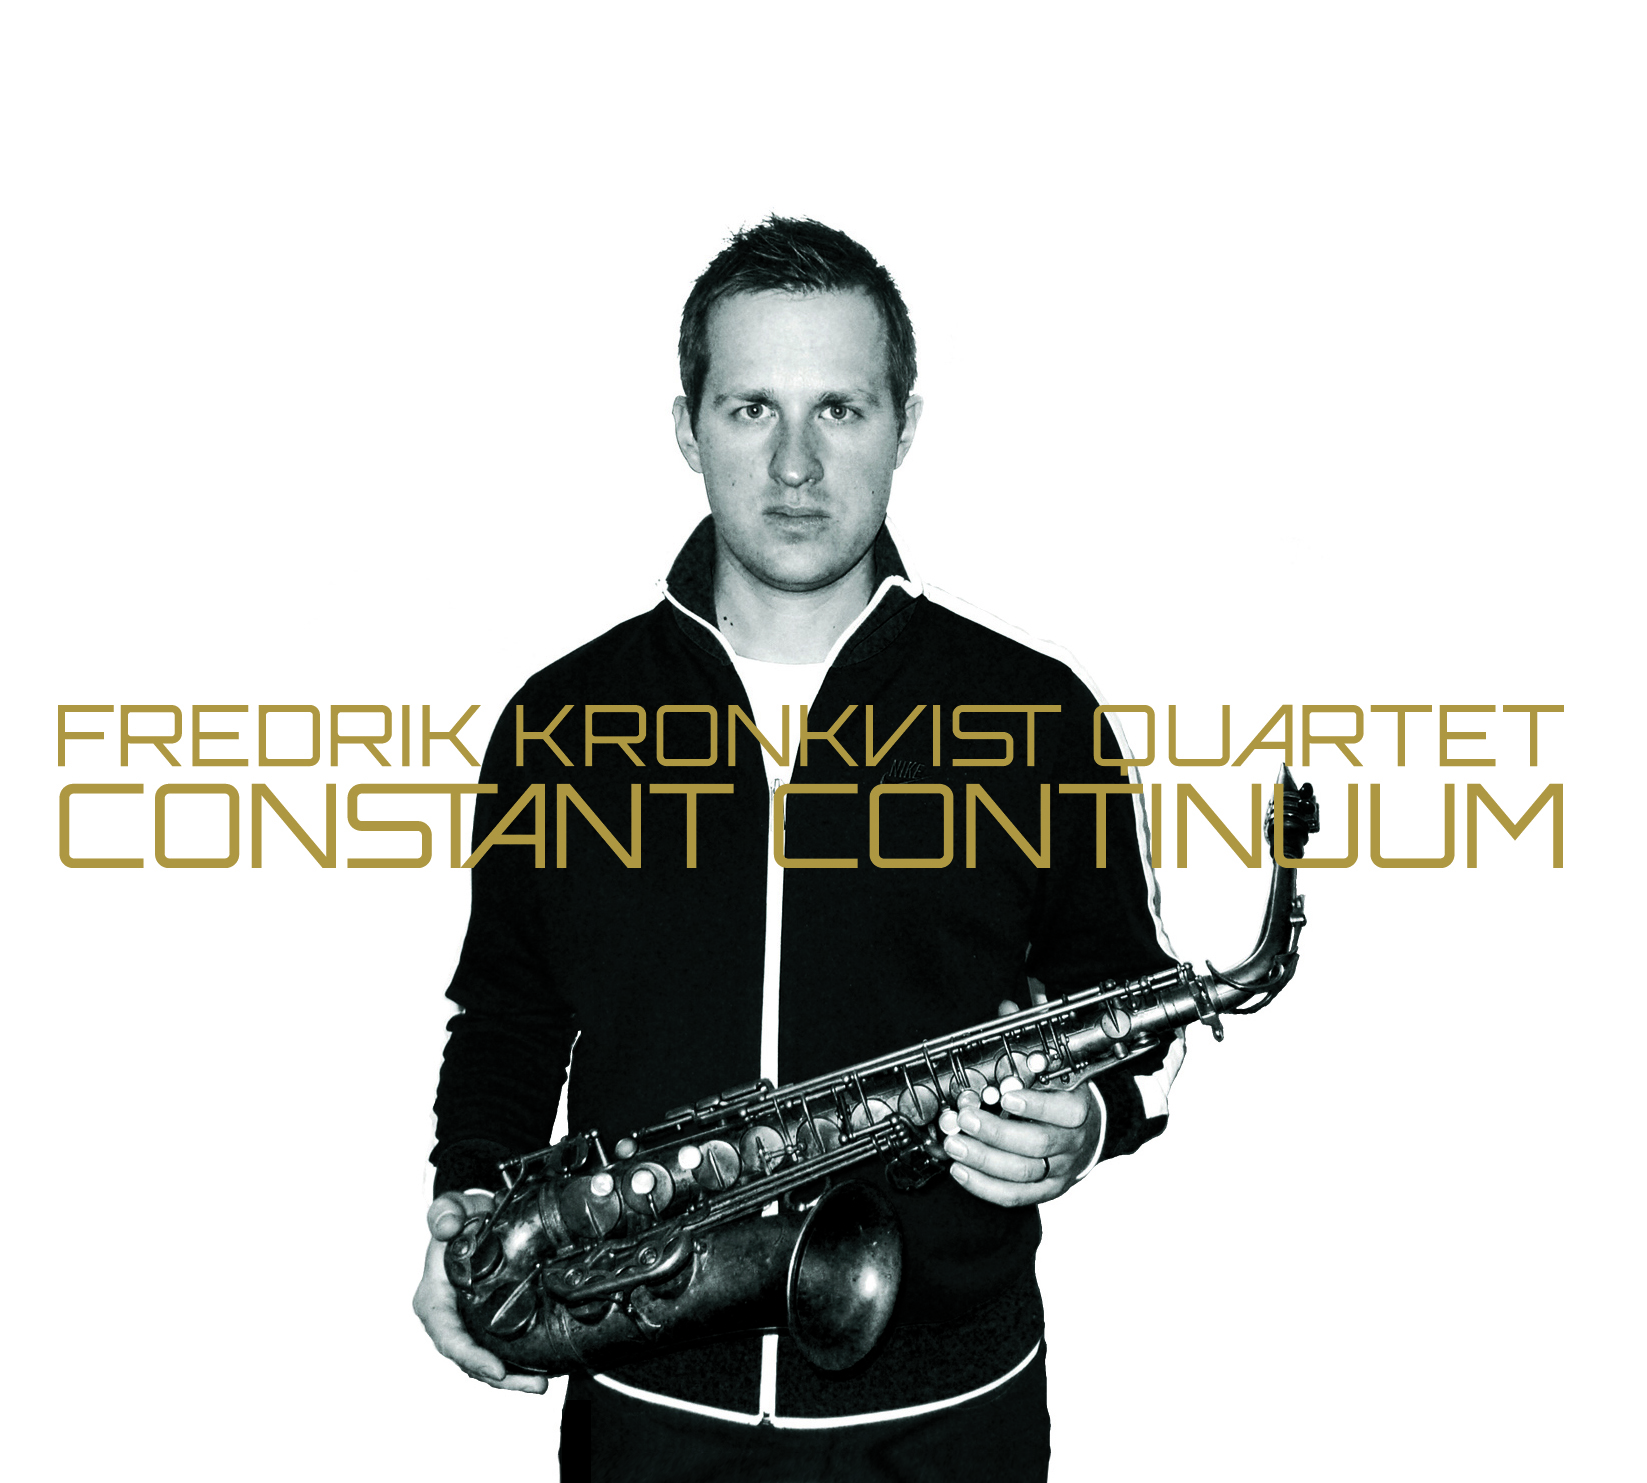 Constant Continuum by Fredrik Kronkvist